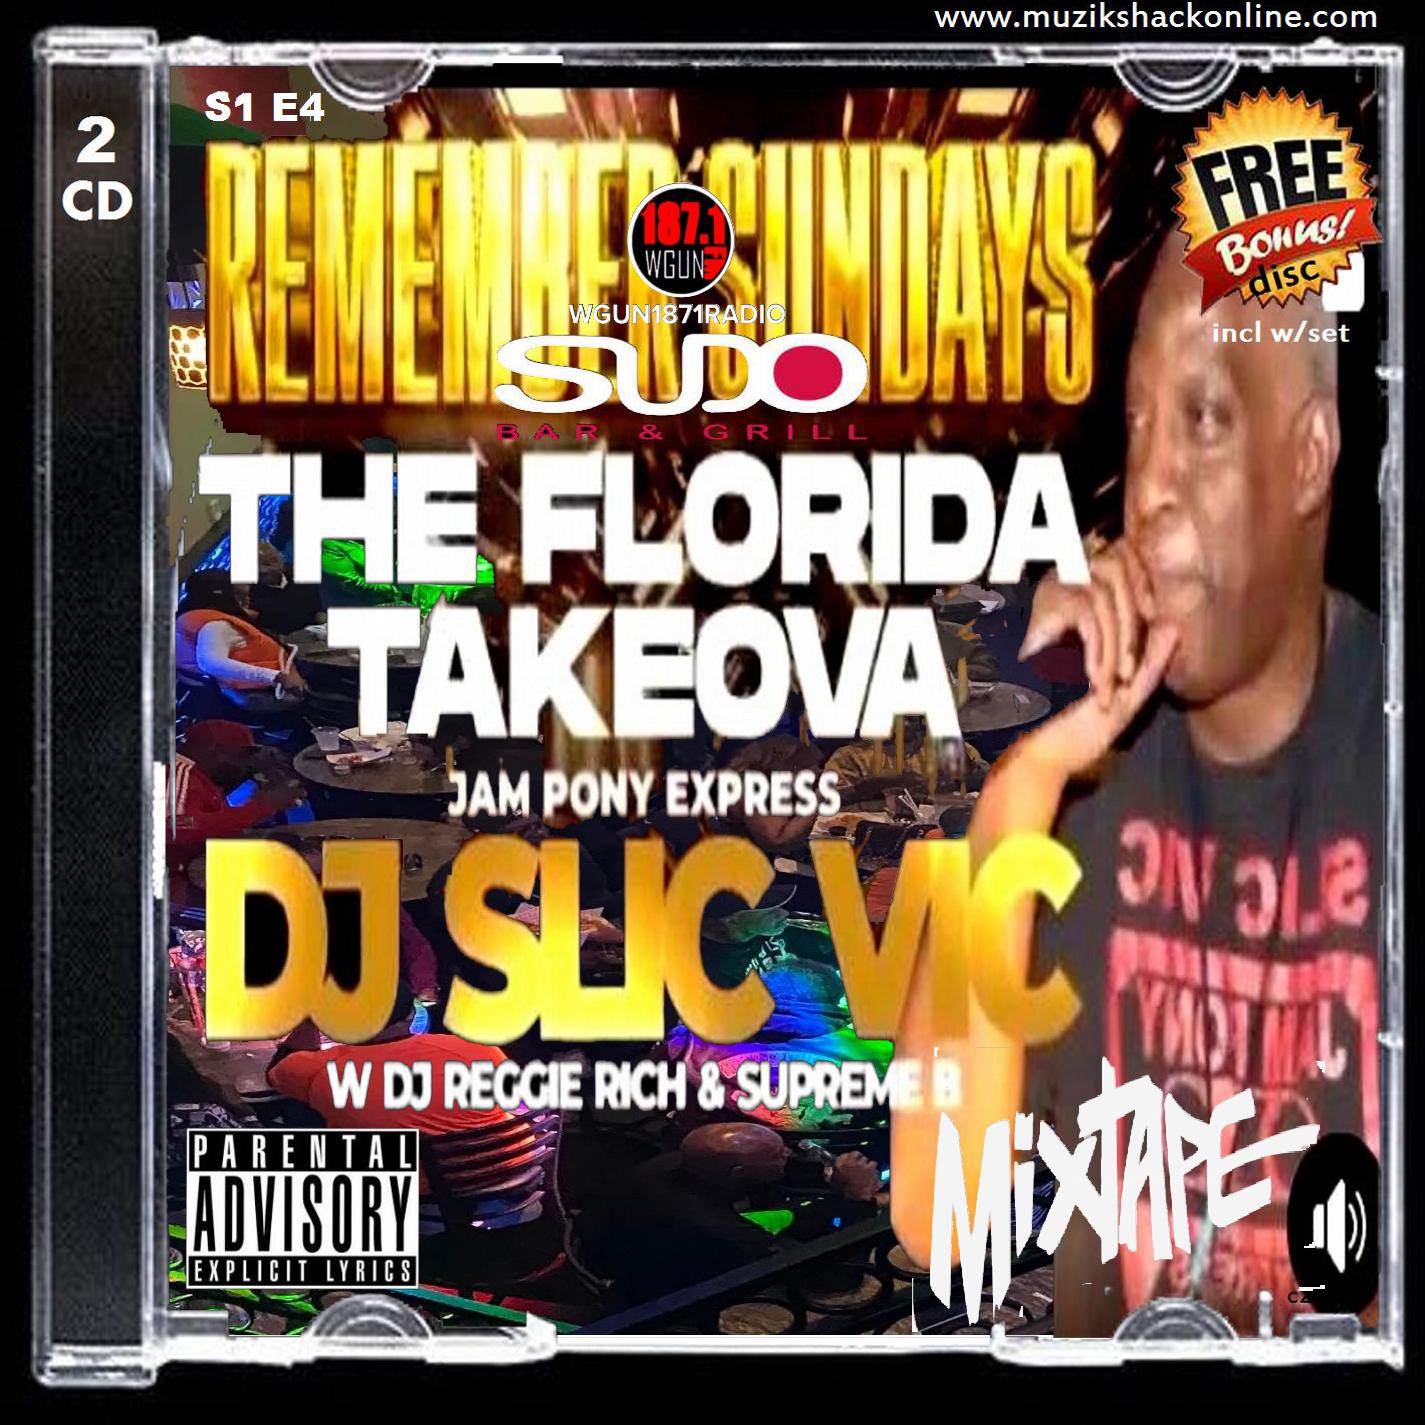 SLIC VIC - SUDOS ELLENWOOD THE FLORIDA TAKEOVA (LIVE SHOW) c2023